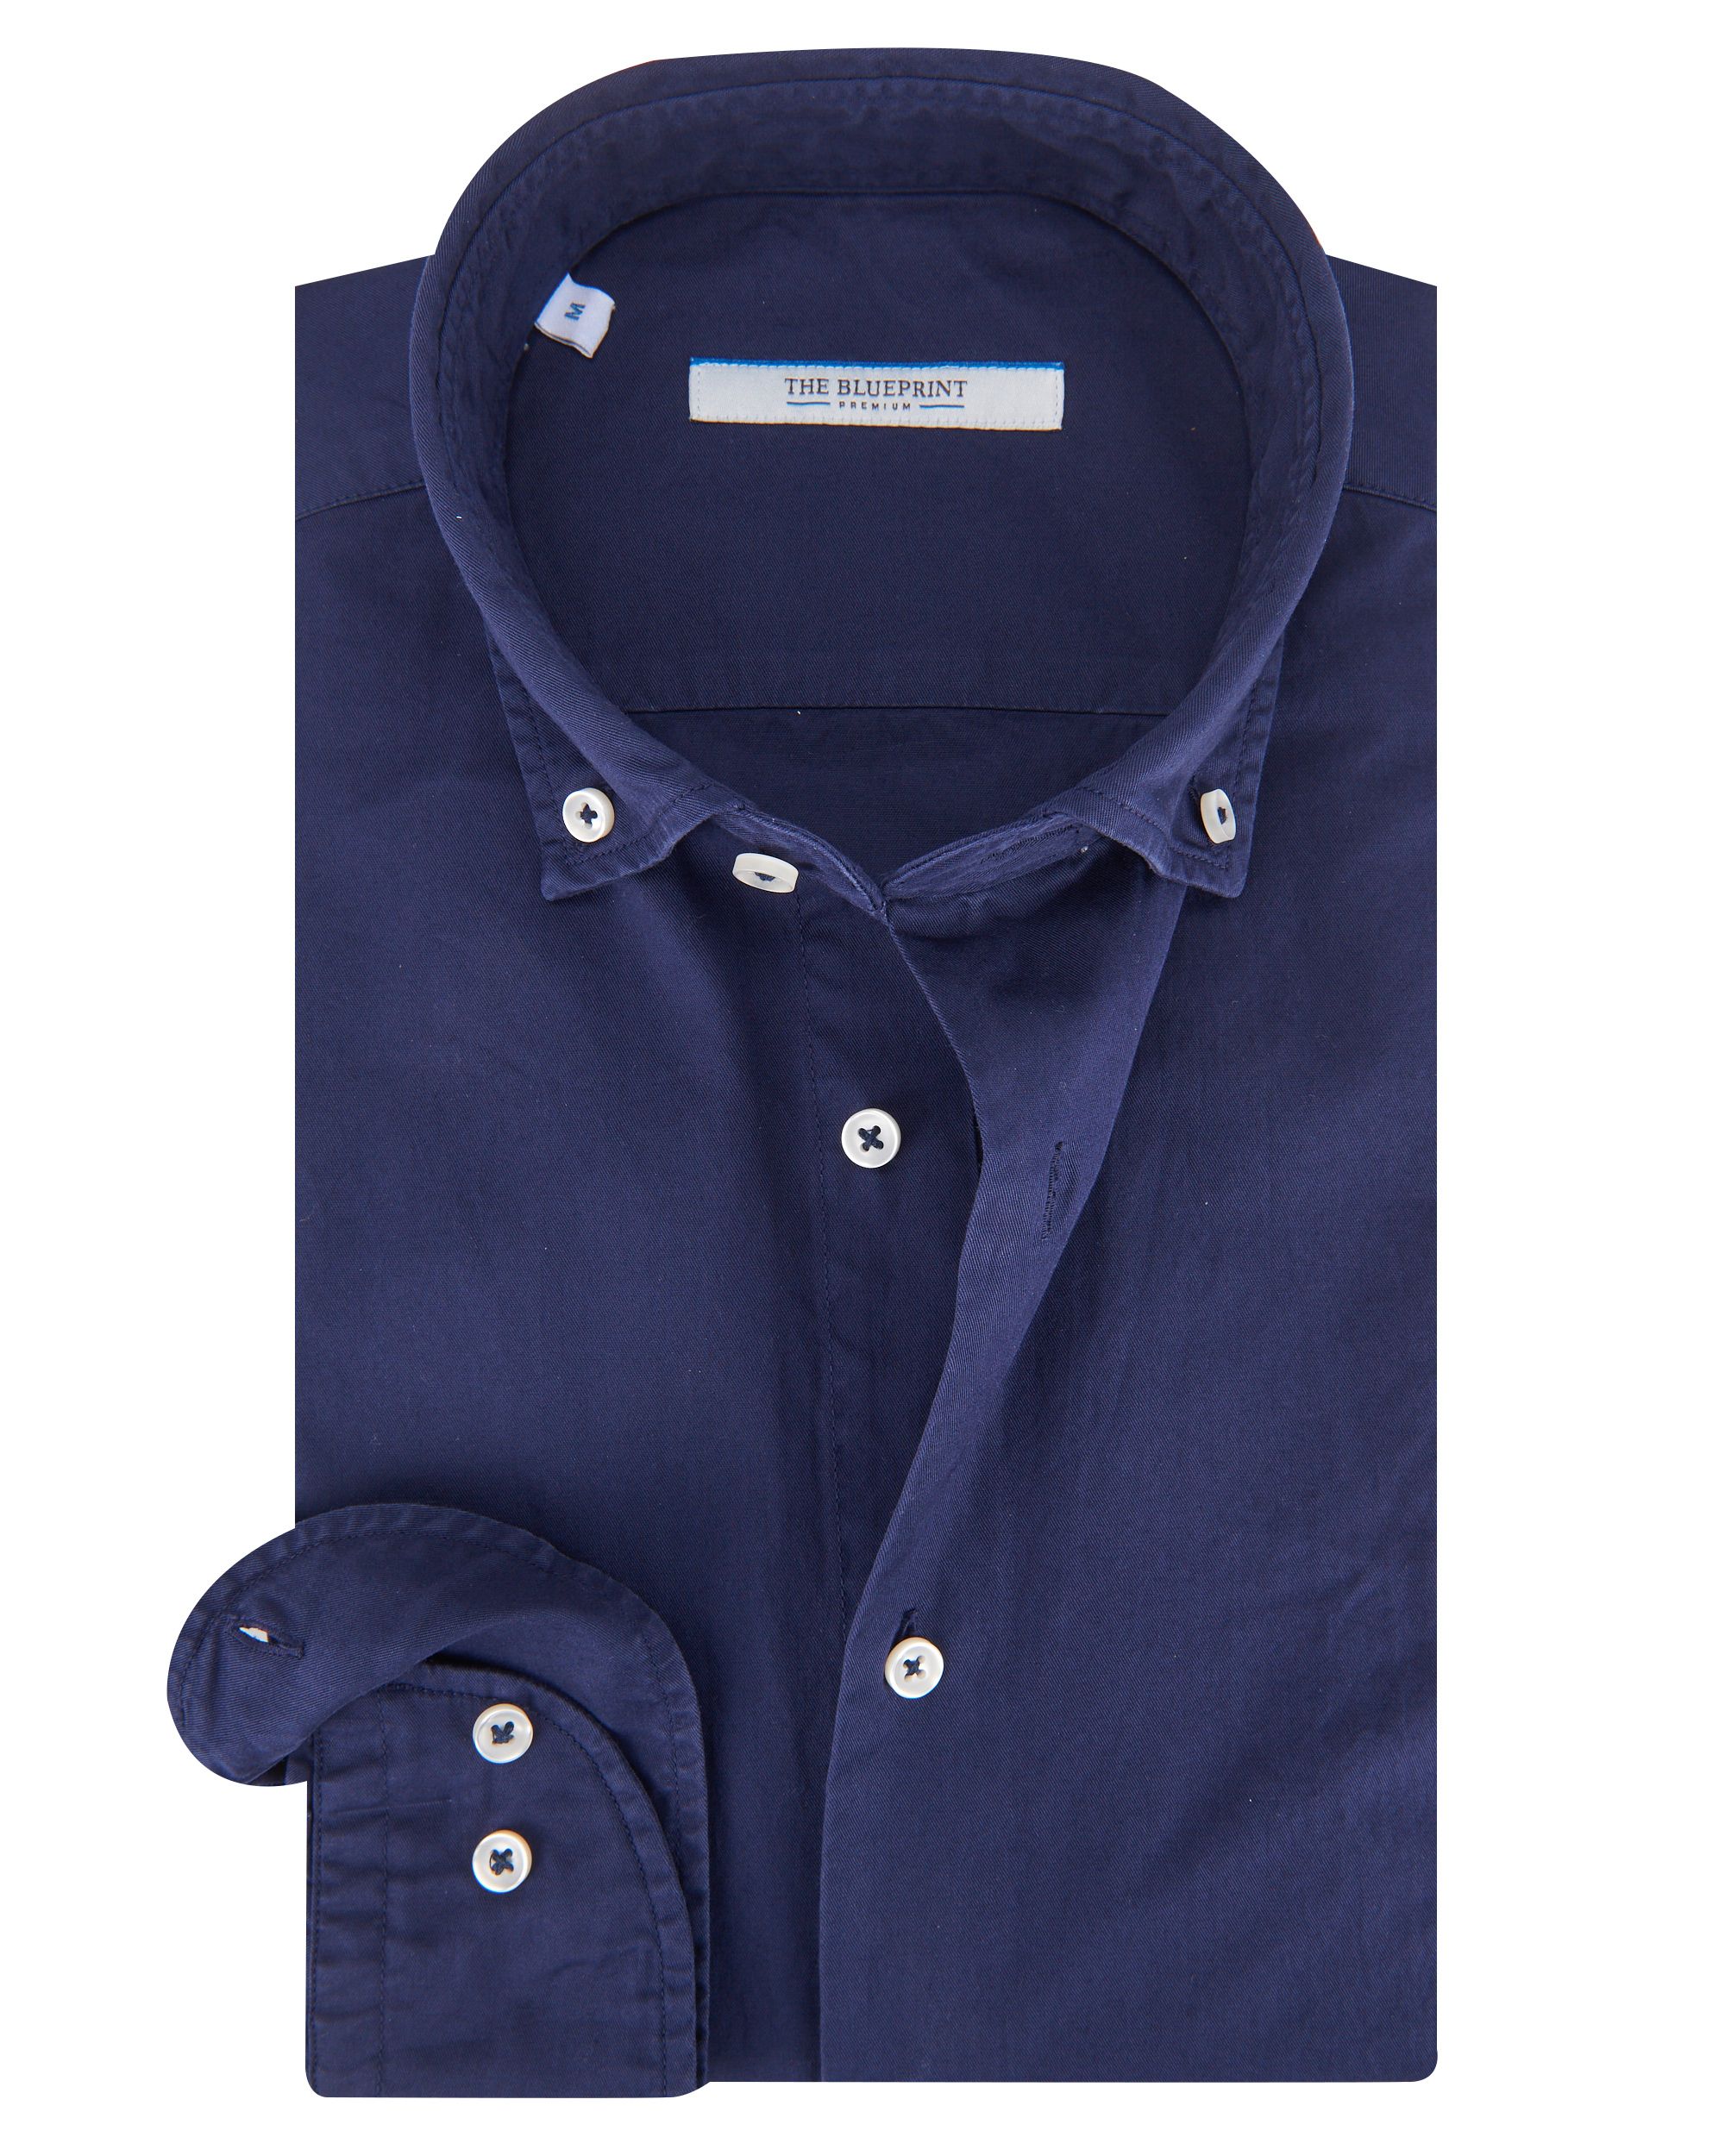 The BLUEPRINT Overhemd LM Donkerblauw uni 075032-001-L